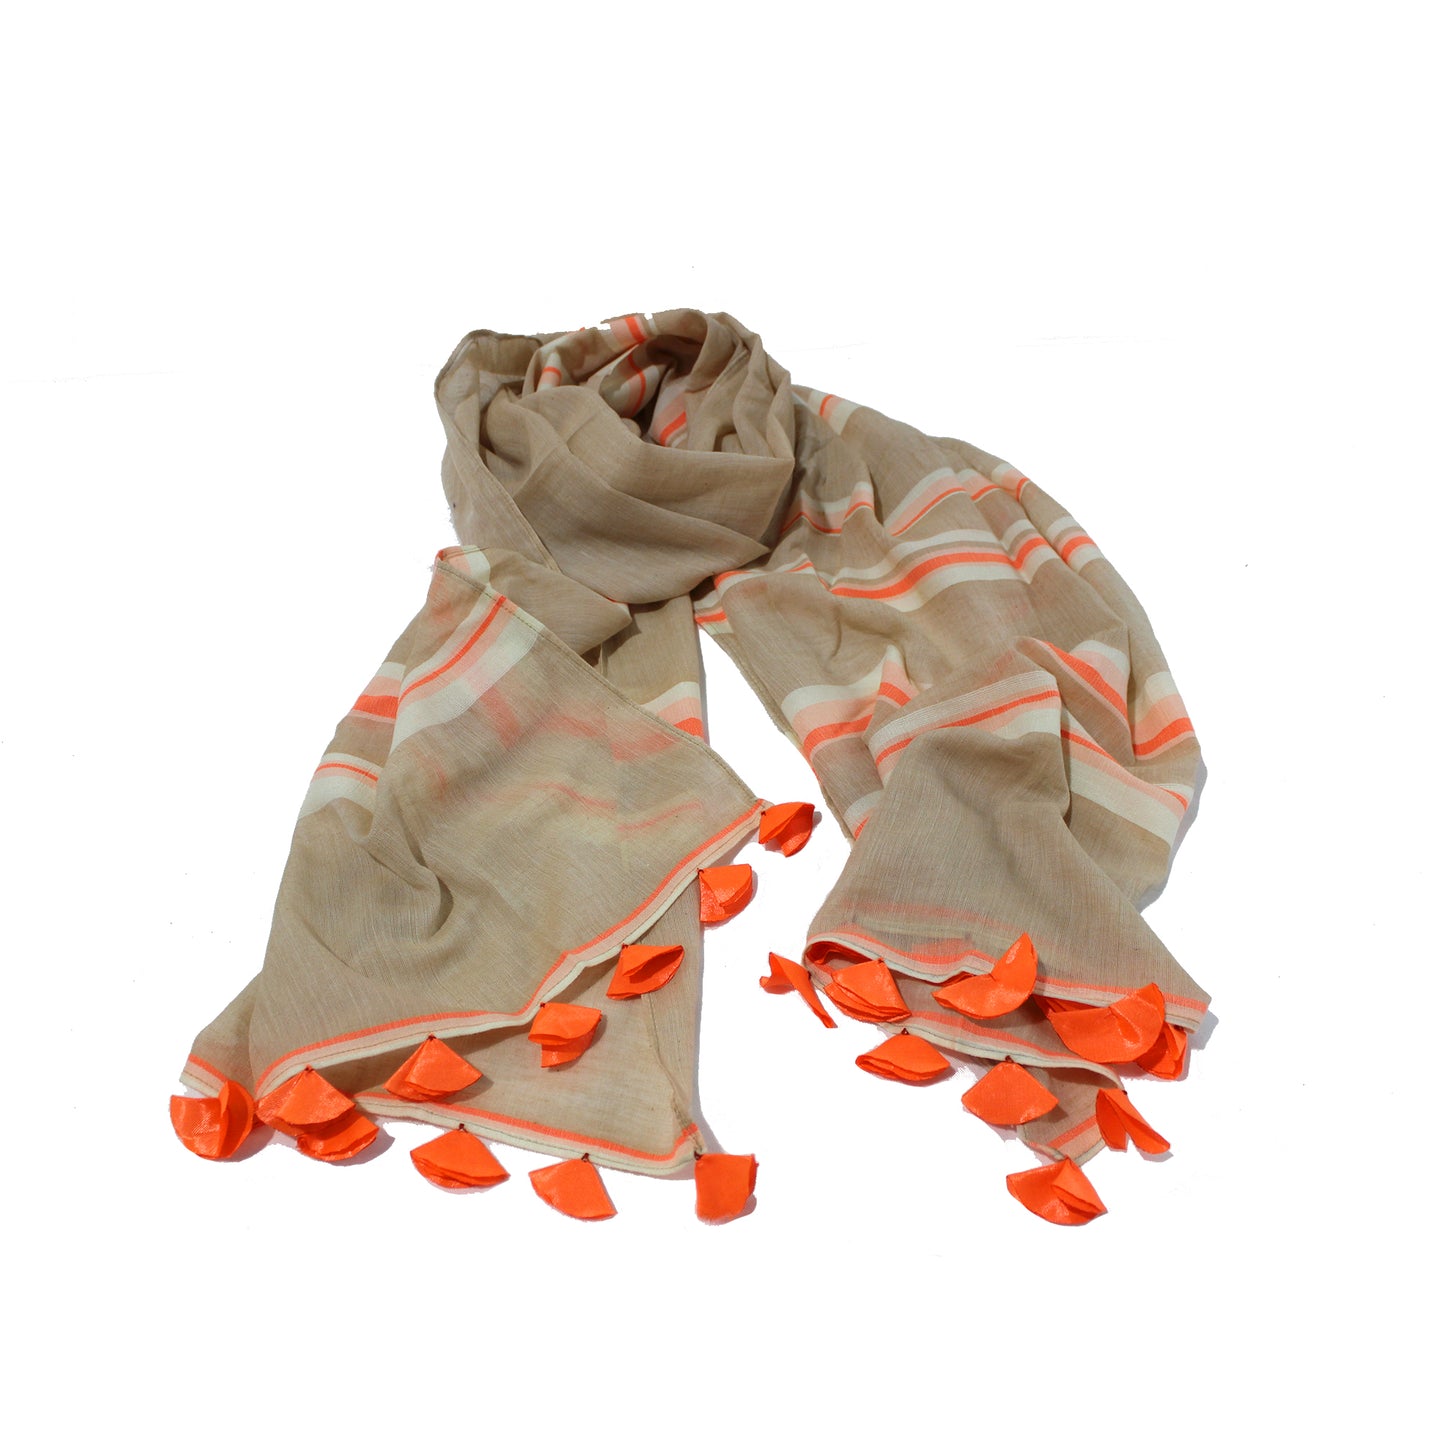 Neon orange origami crepe scarf